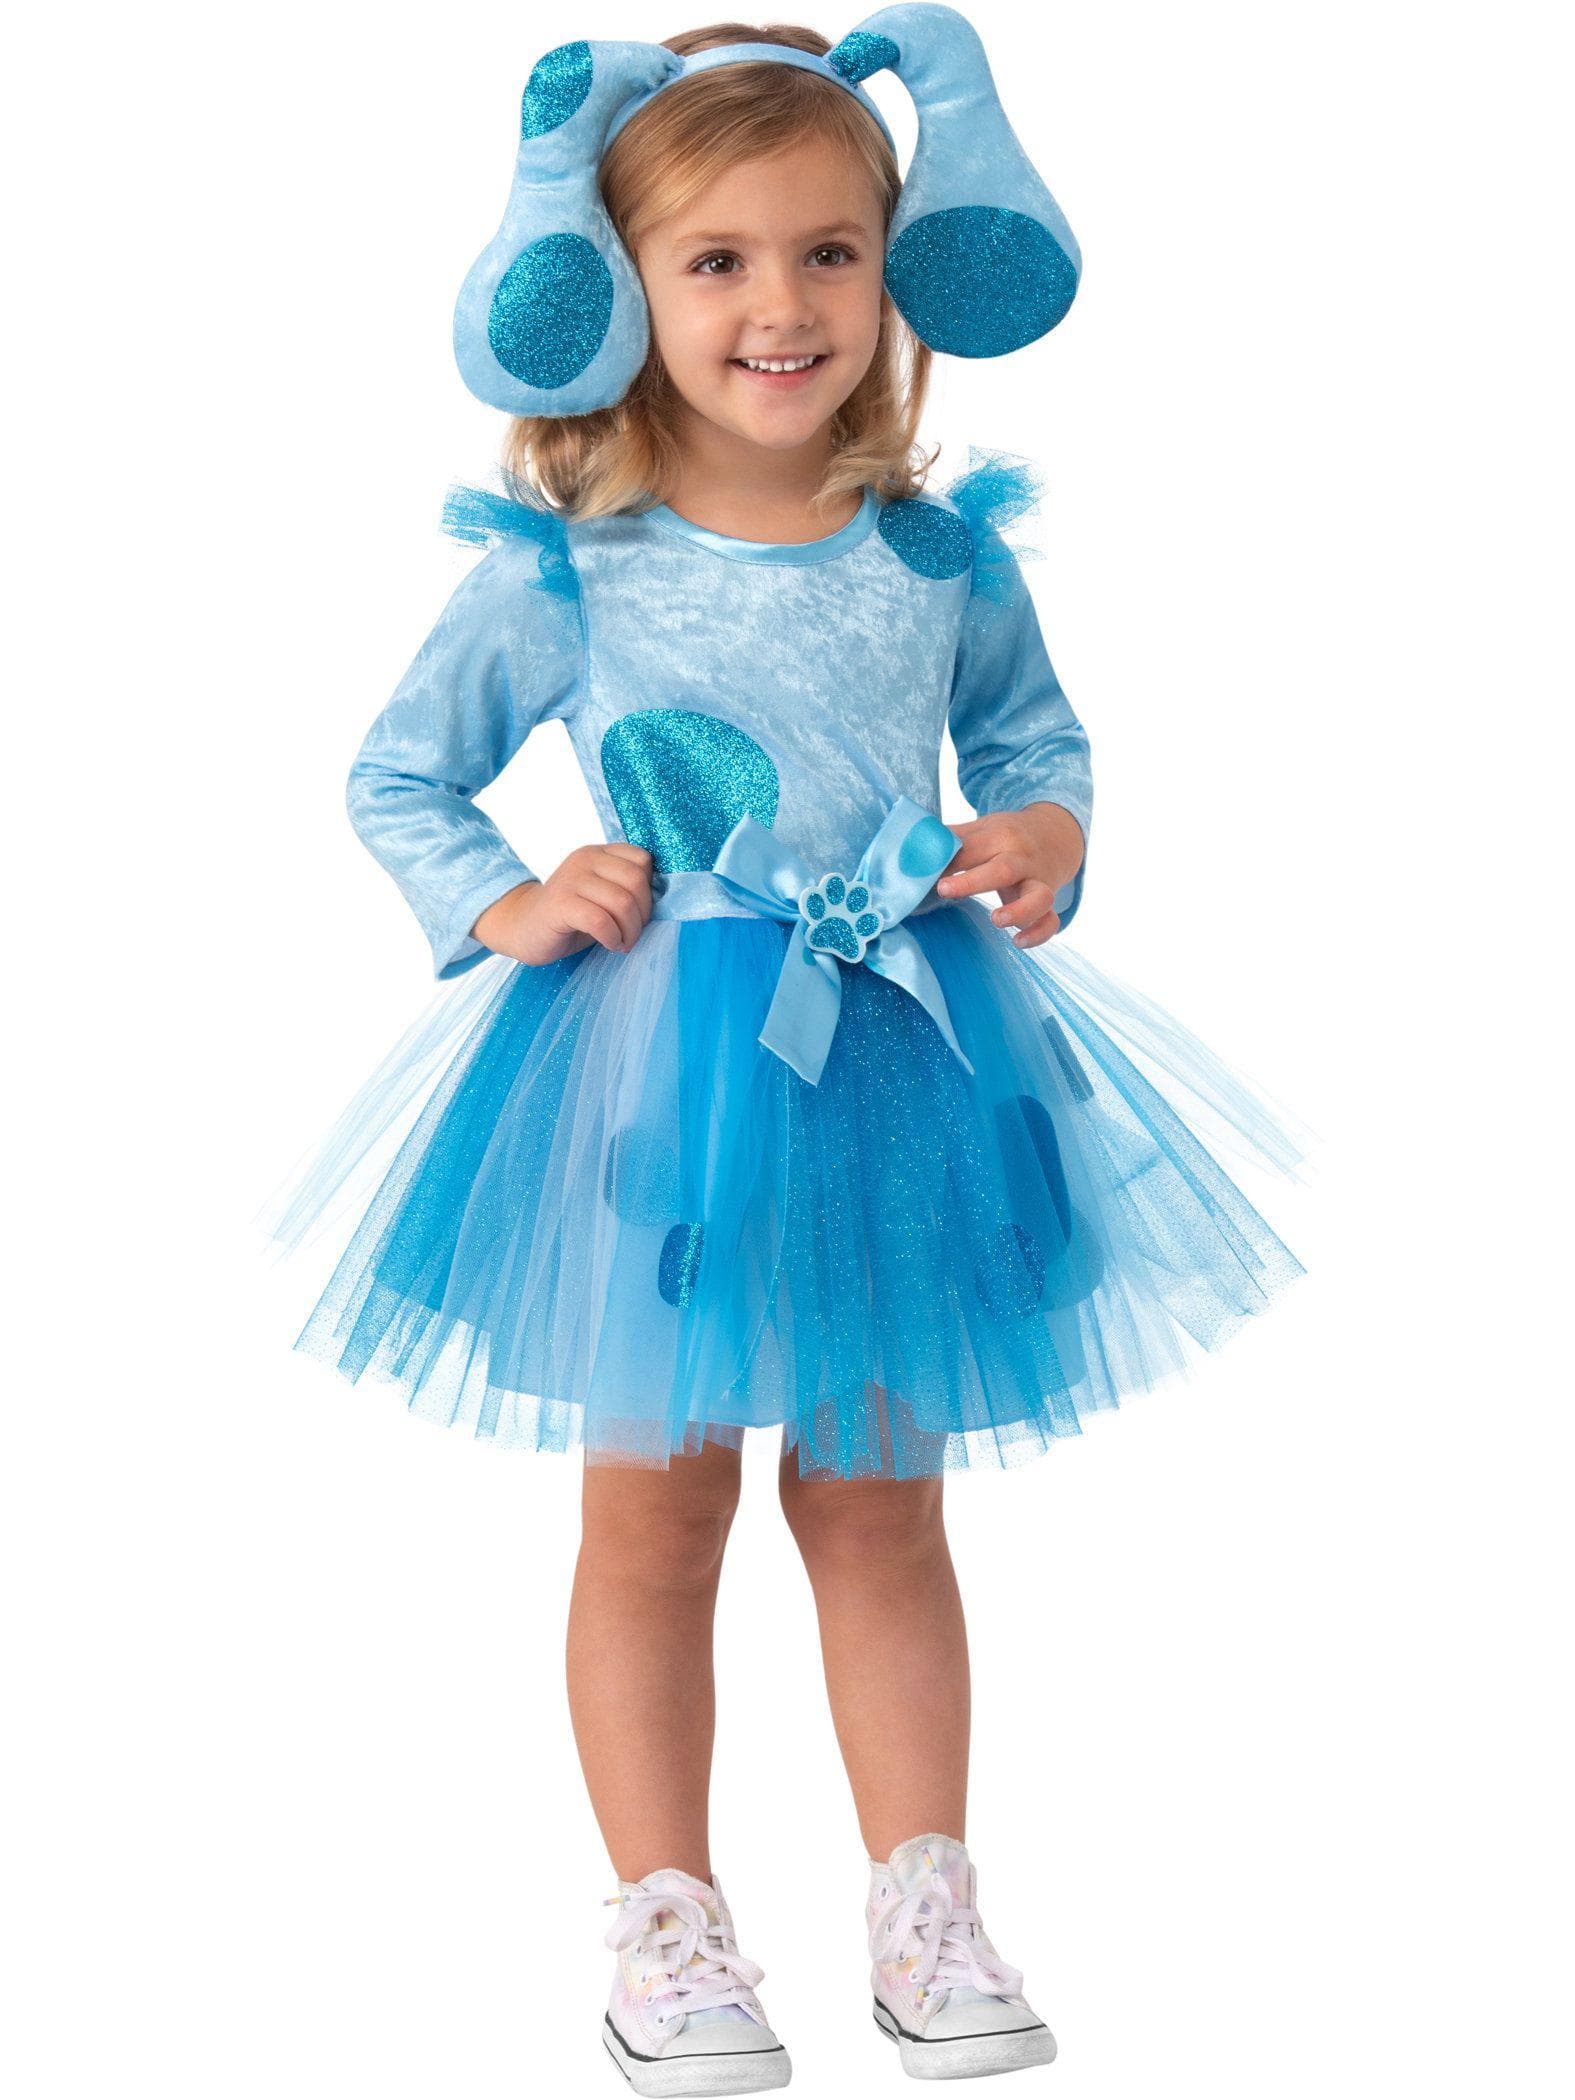 Girls' Blue's Clues Blue Tutu Dress and Headband - costumes.com